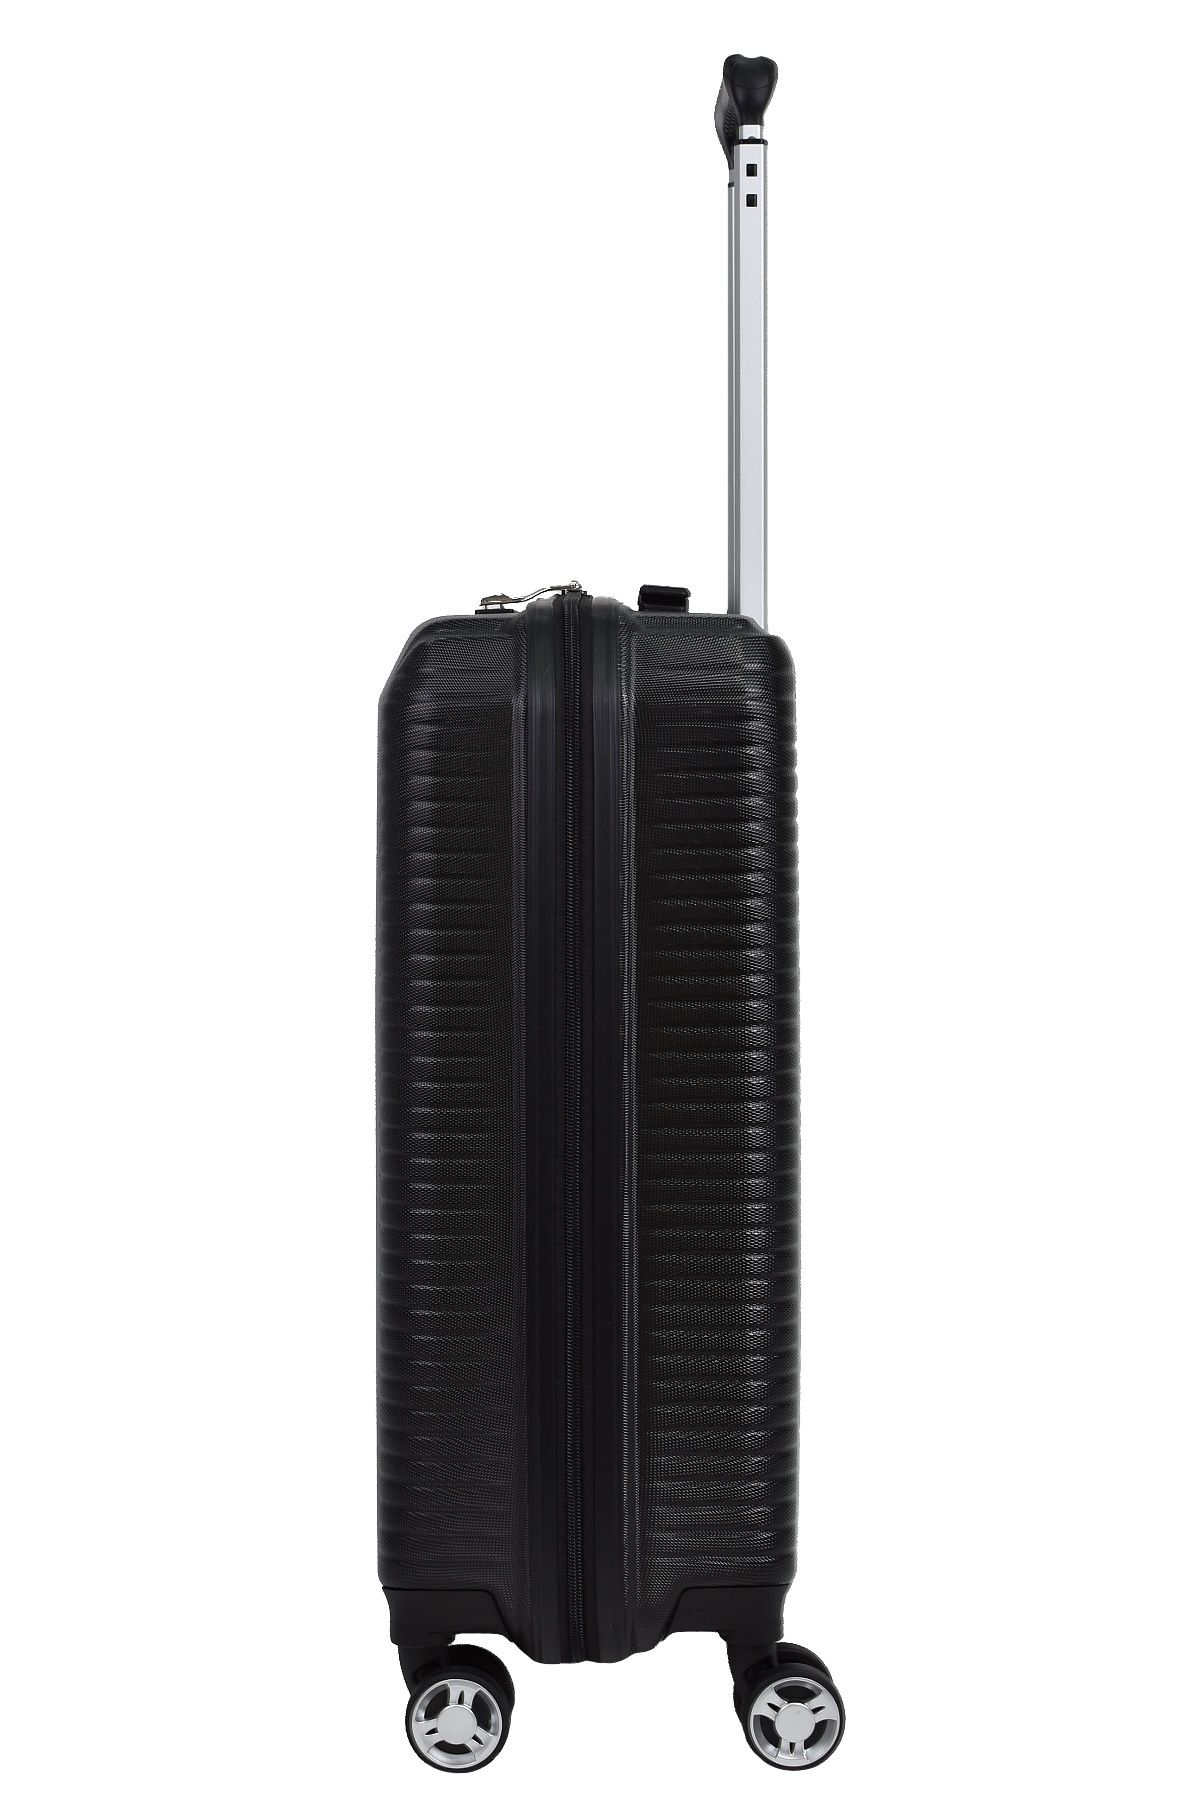 Pierre Cardin چمدان اندازه کابین لوکس PC6500